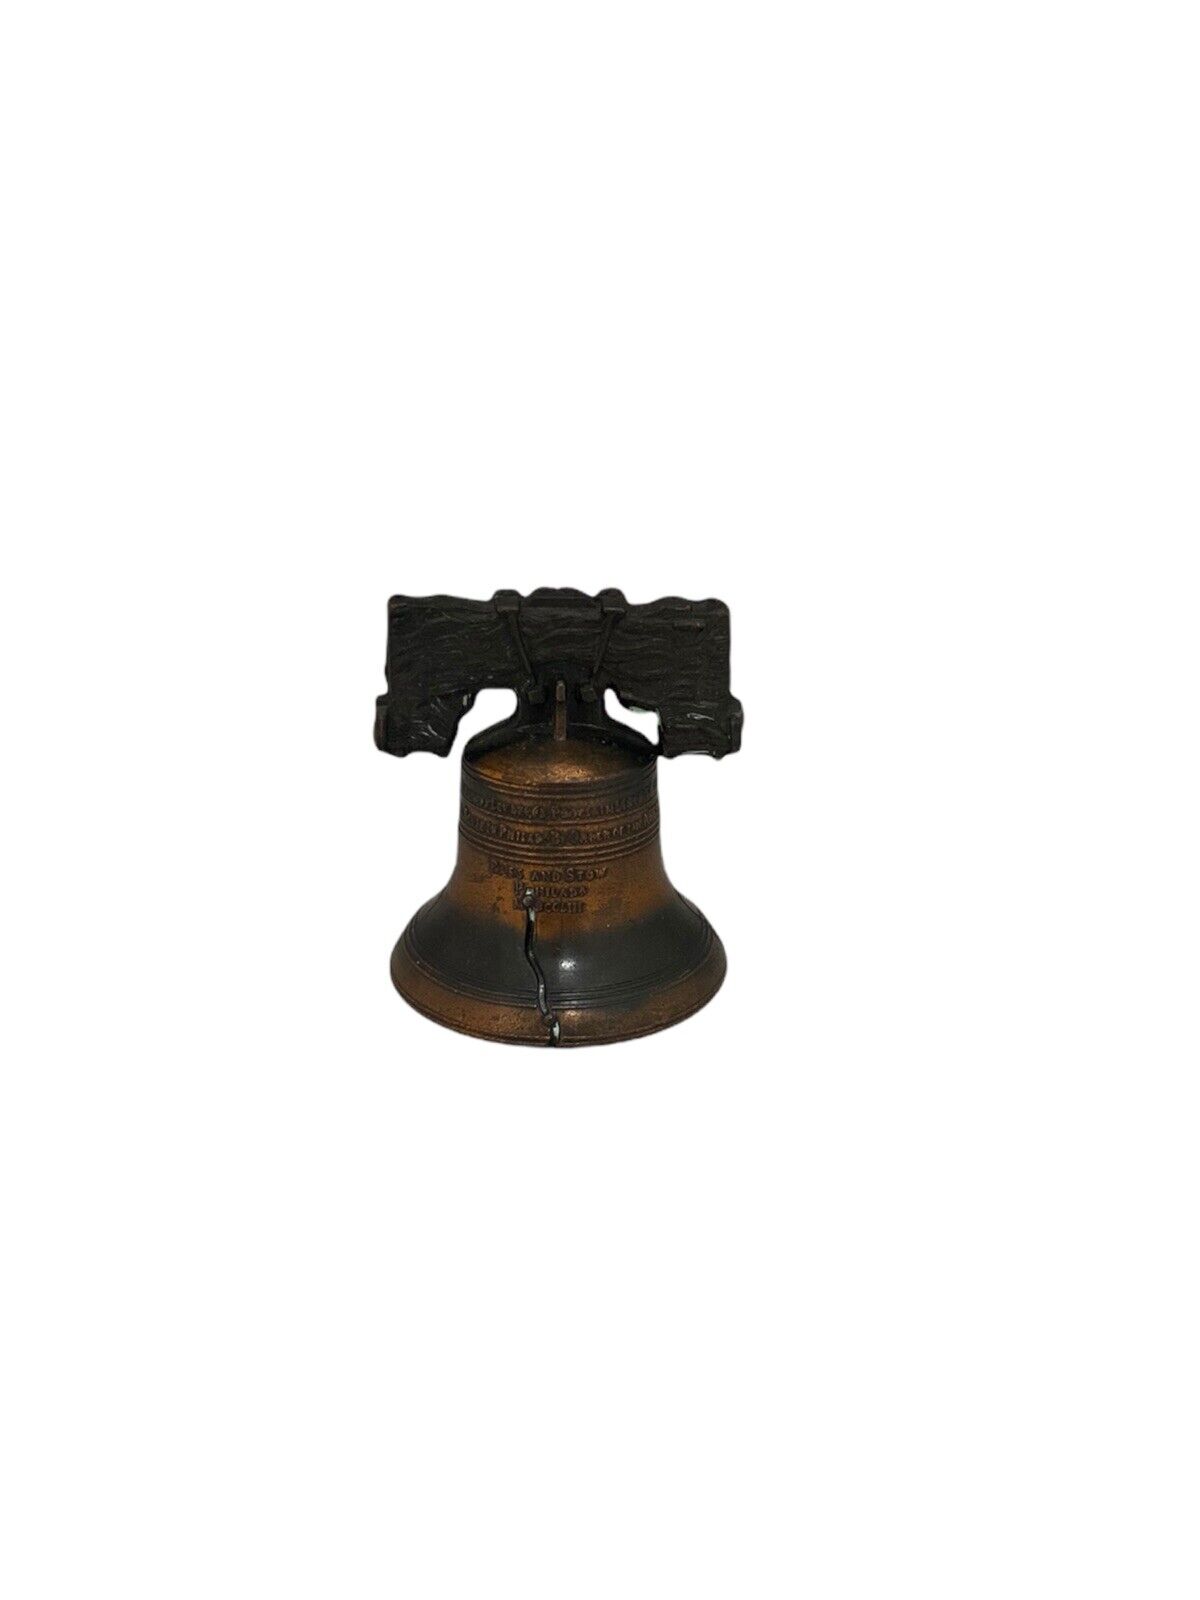 Vintage Miniature Metal Liberty Bell Souvenir Replica 2.5 inches tall